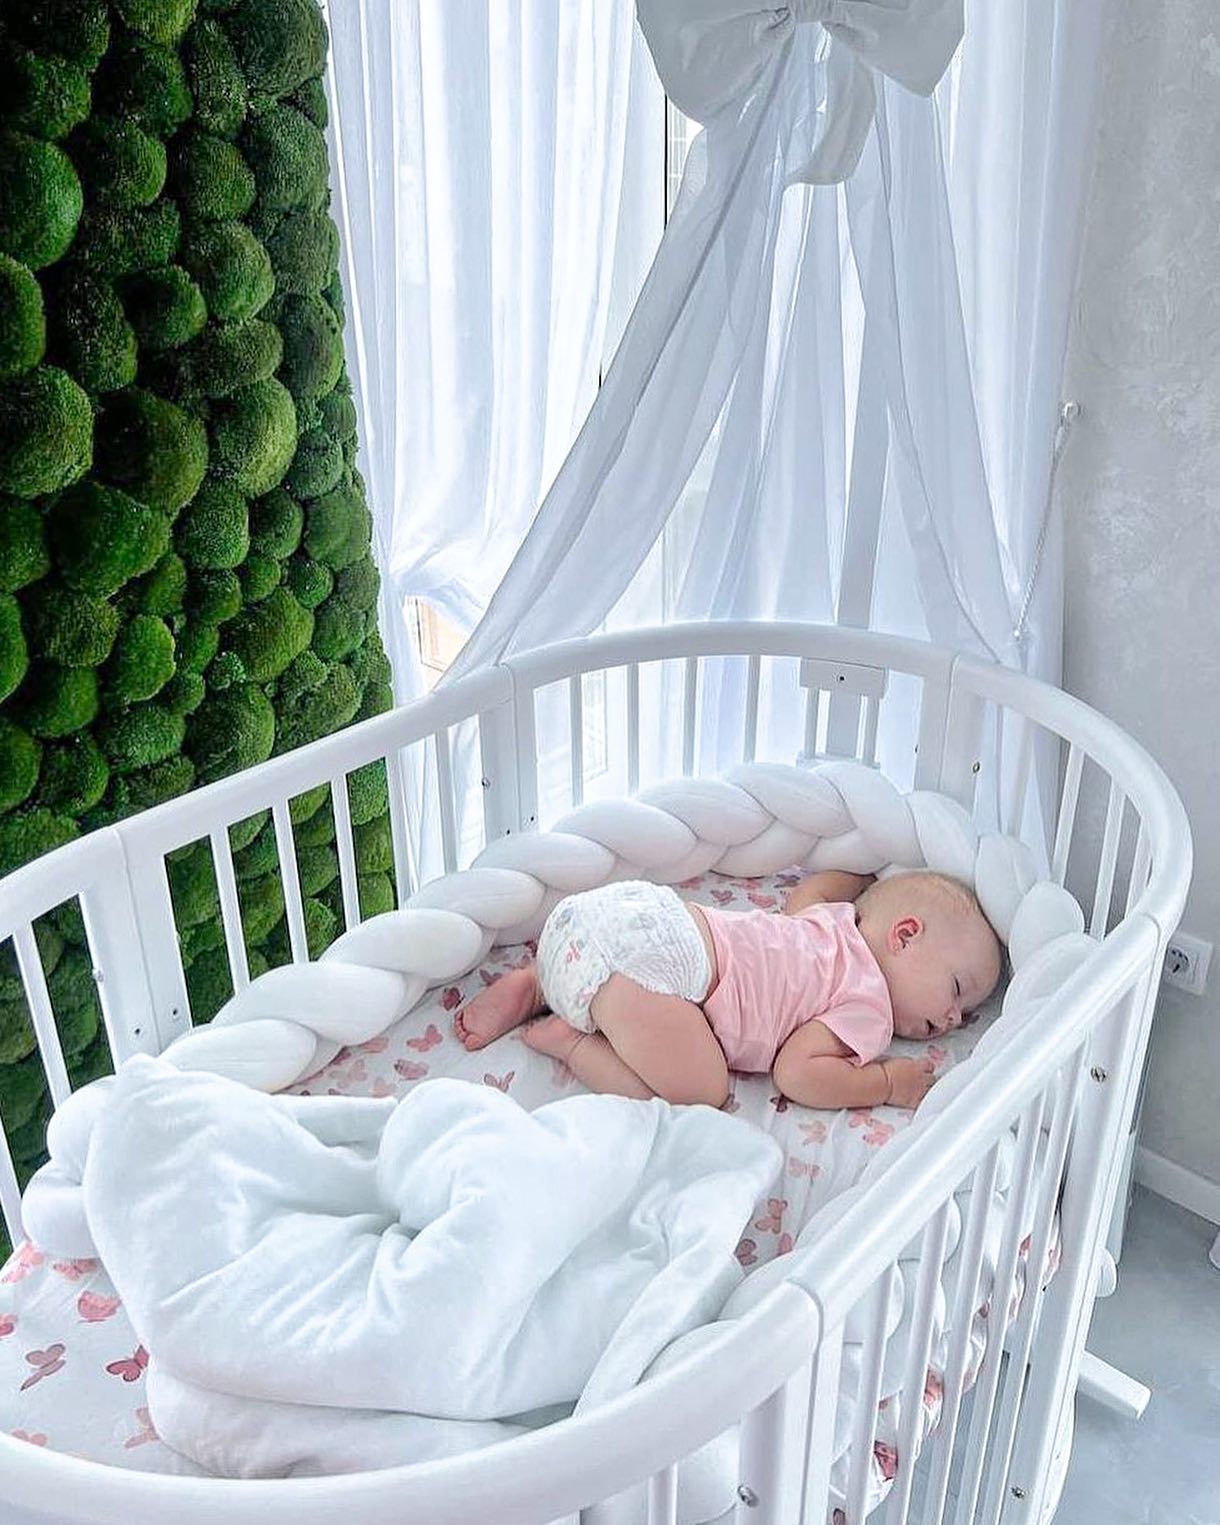 Baby Cribs - ComfortBaby®